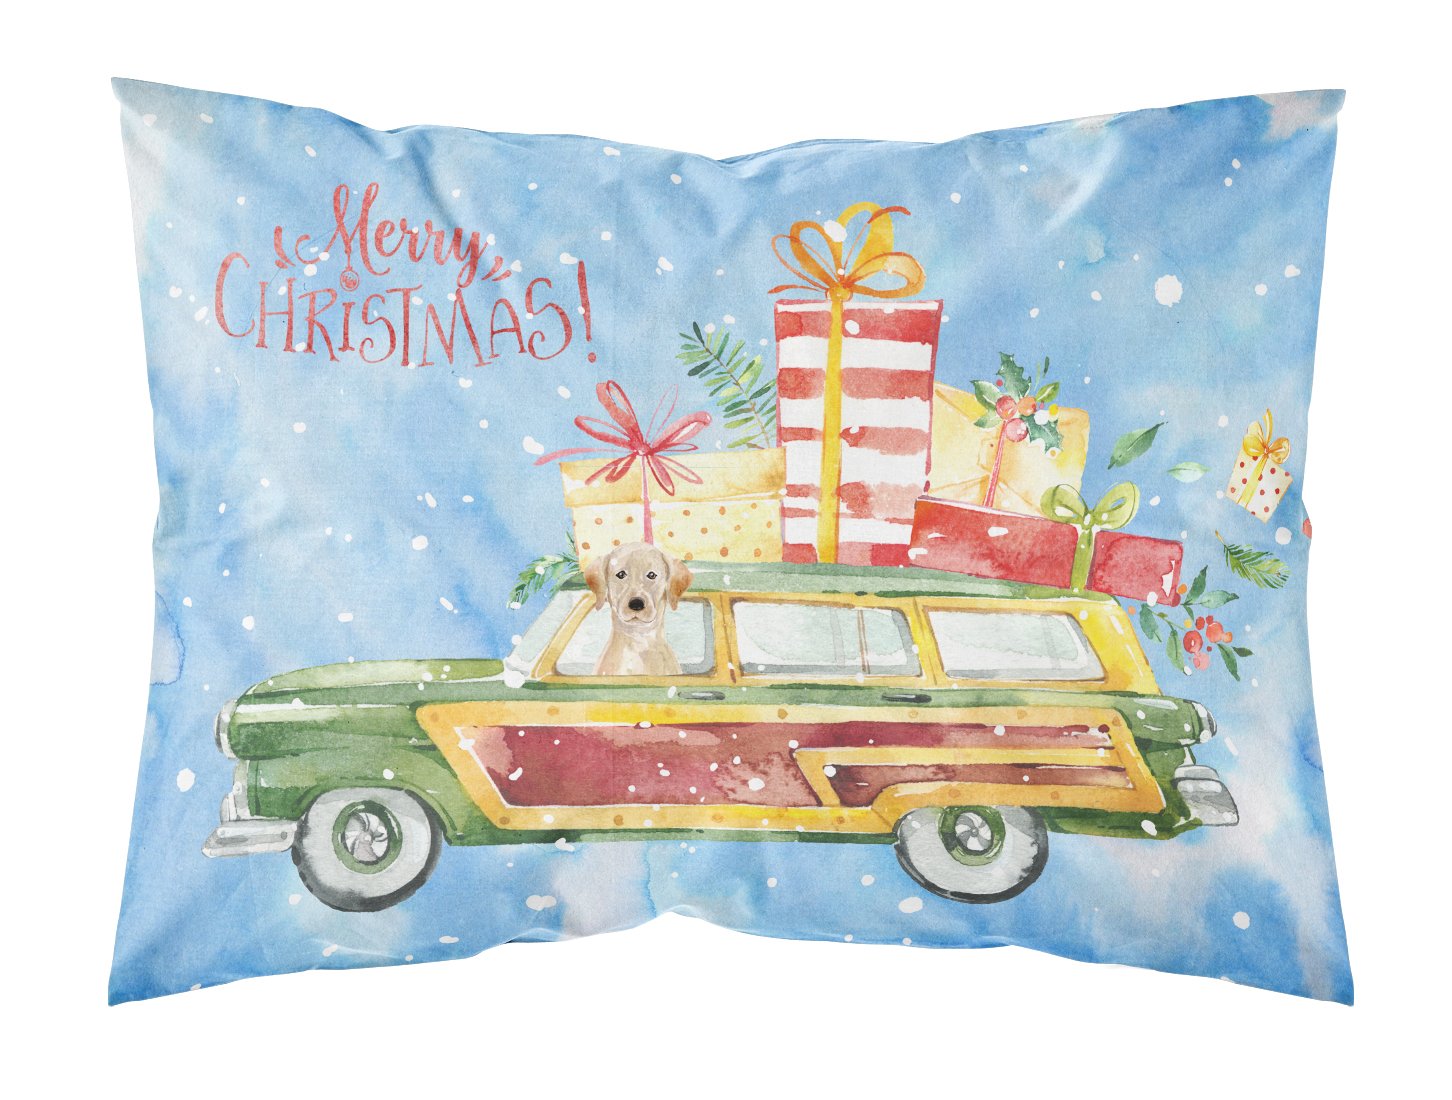 Merry Christmas Yellow Labrador Retriever Fabric Standard Pillowcase CK2439PILLOWCASE by Caroline's Treasures